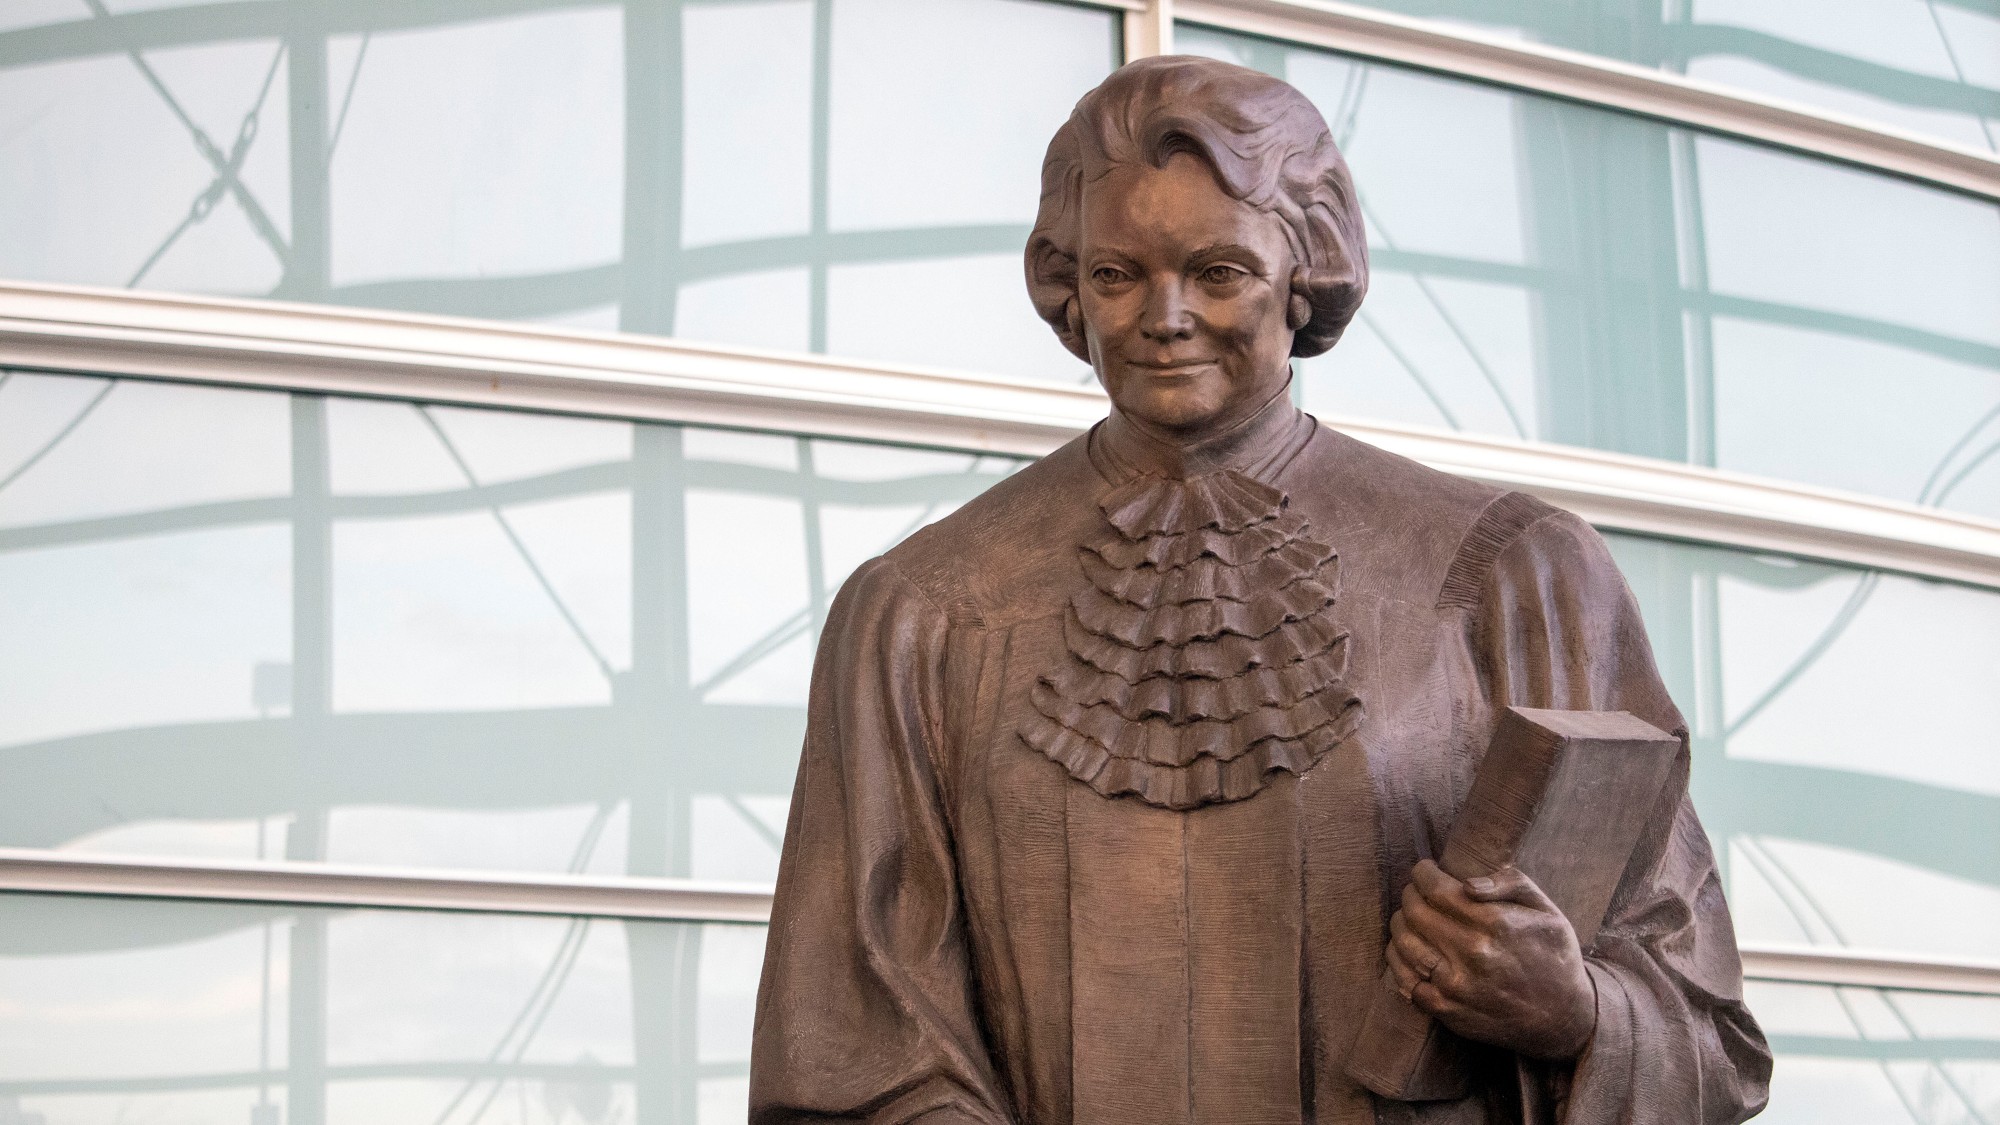 A statue of former Supreme Court Justice Sandra Day O’Connor.